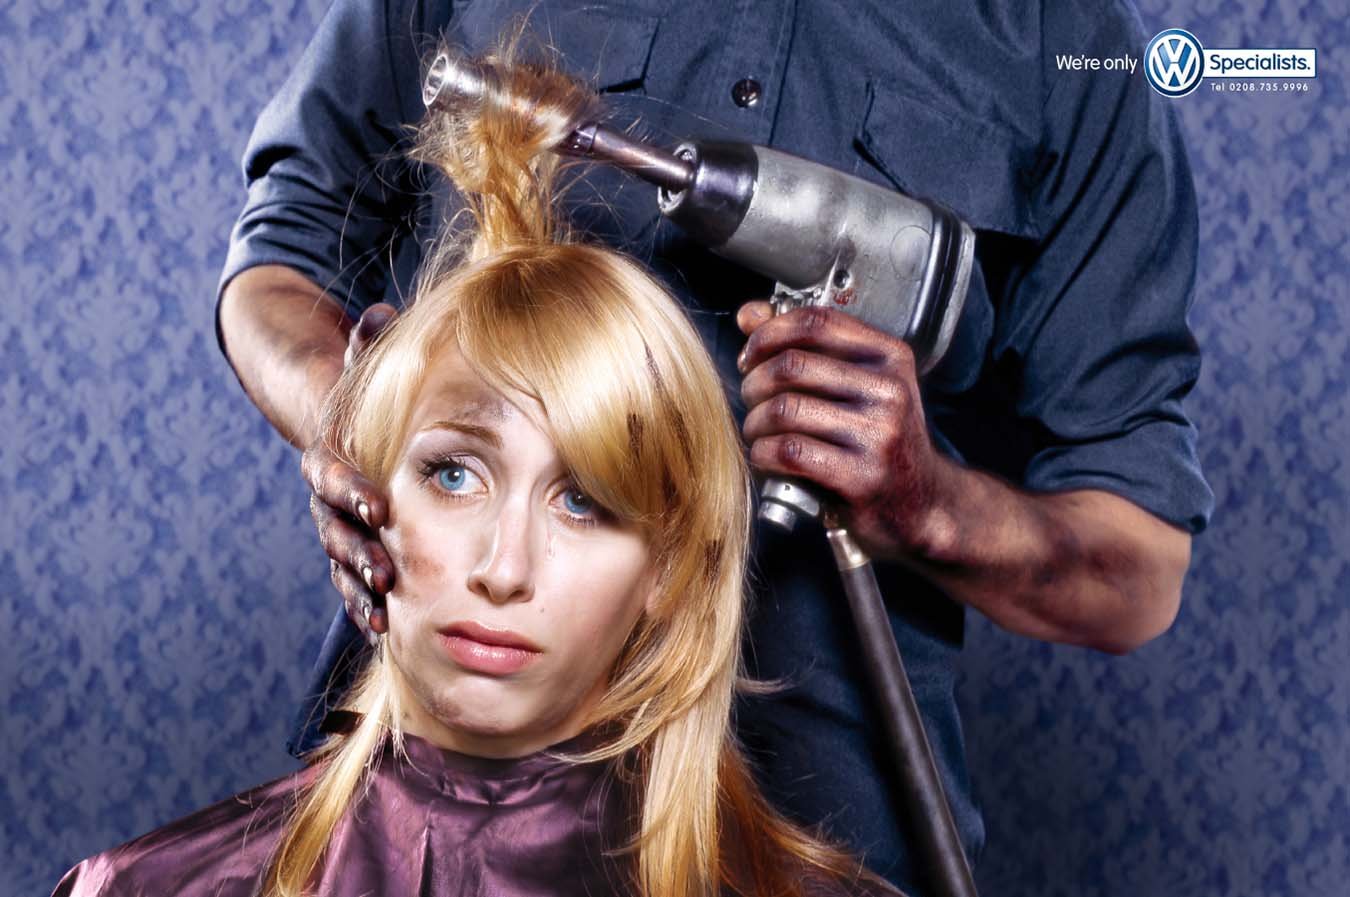 Kinkiest hairdresser ever xxx pic